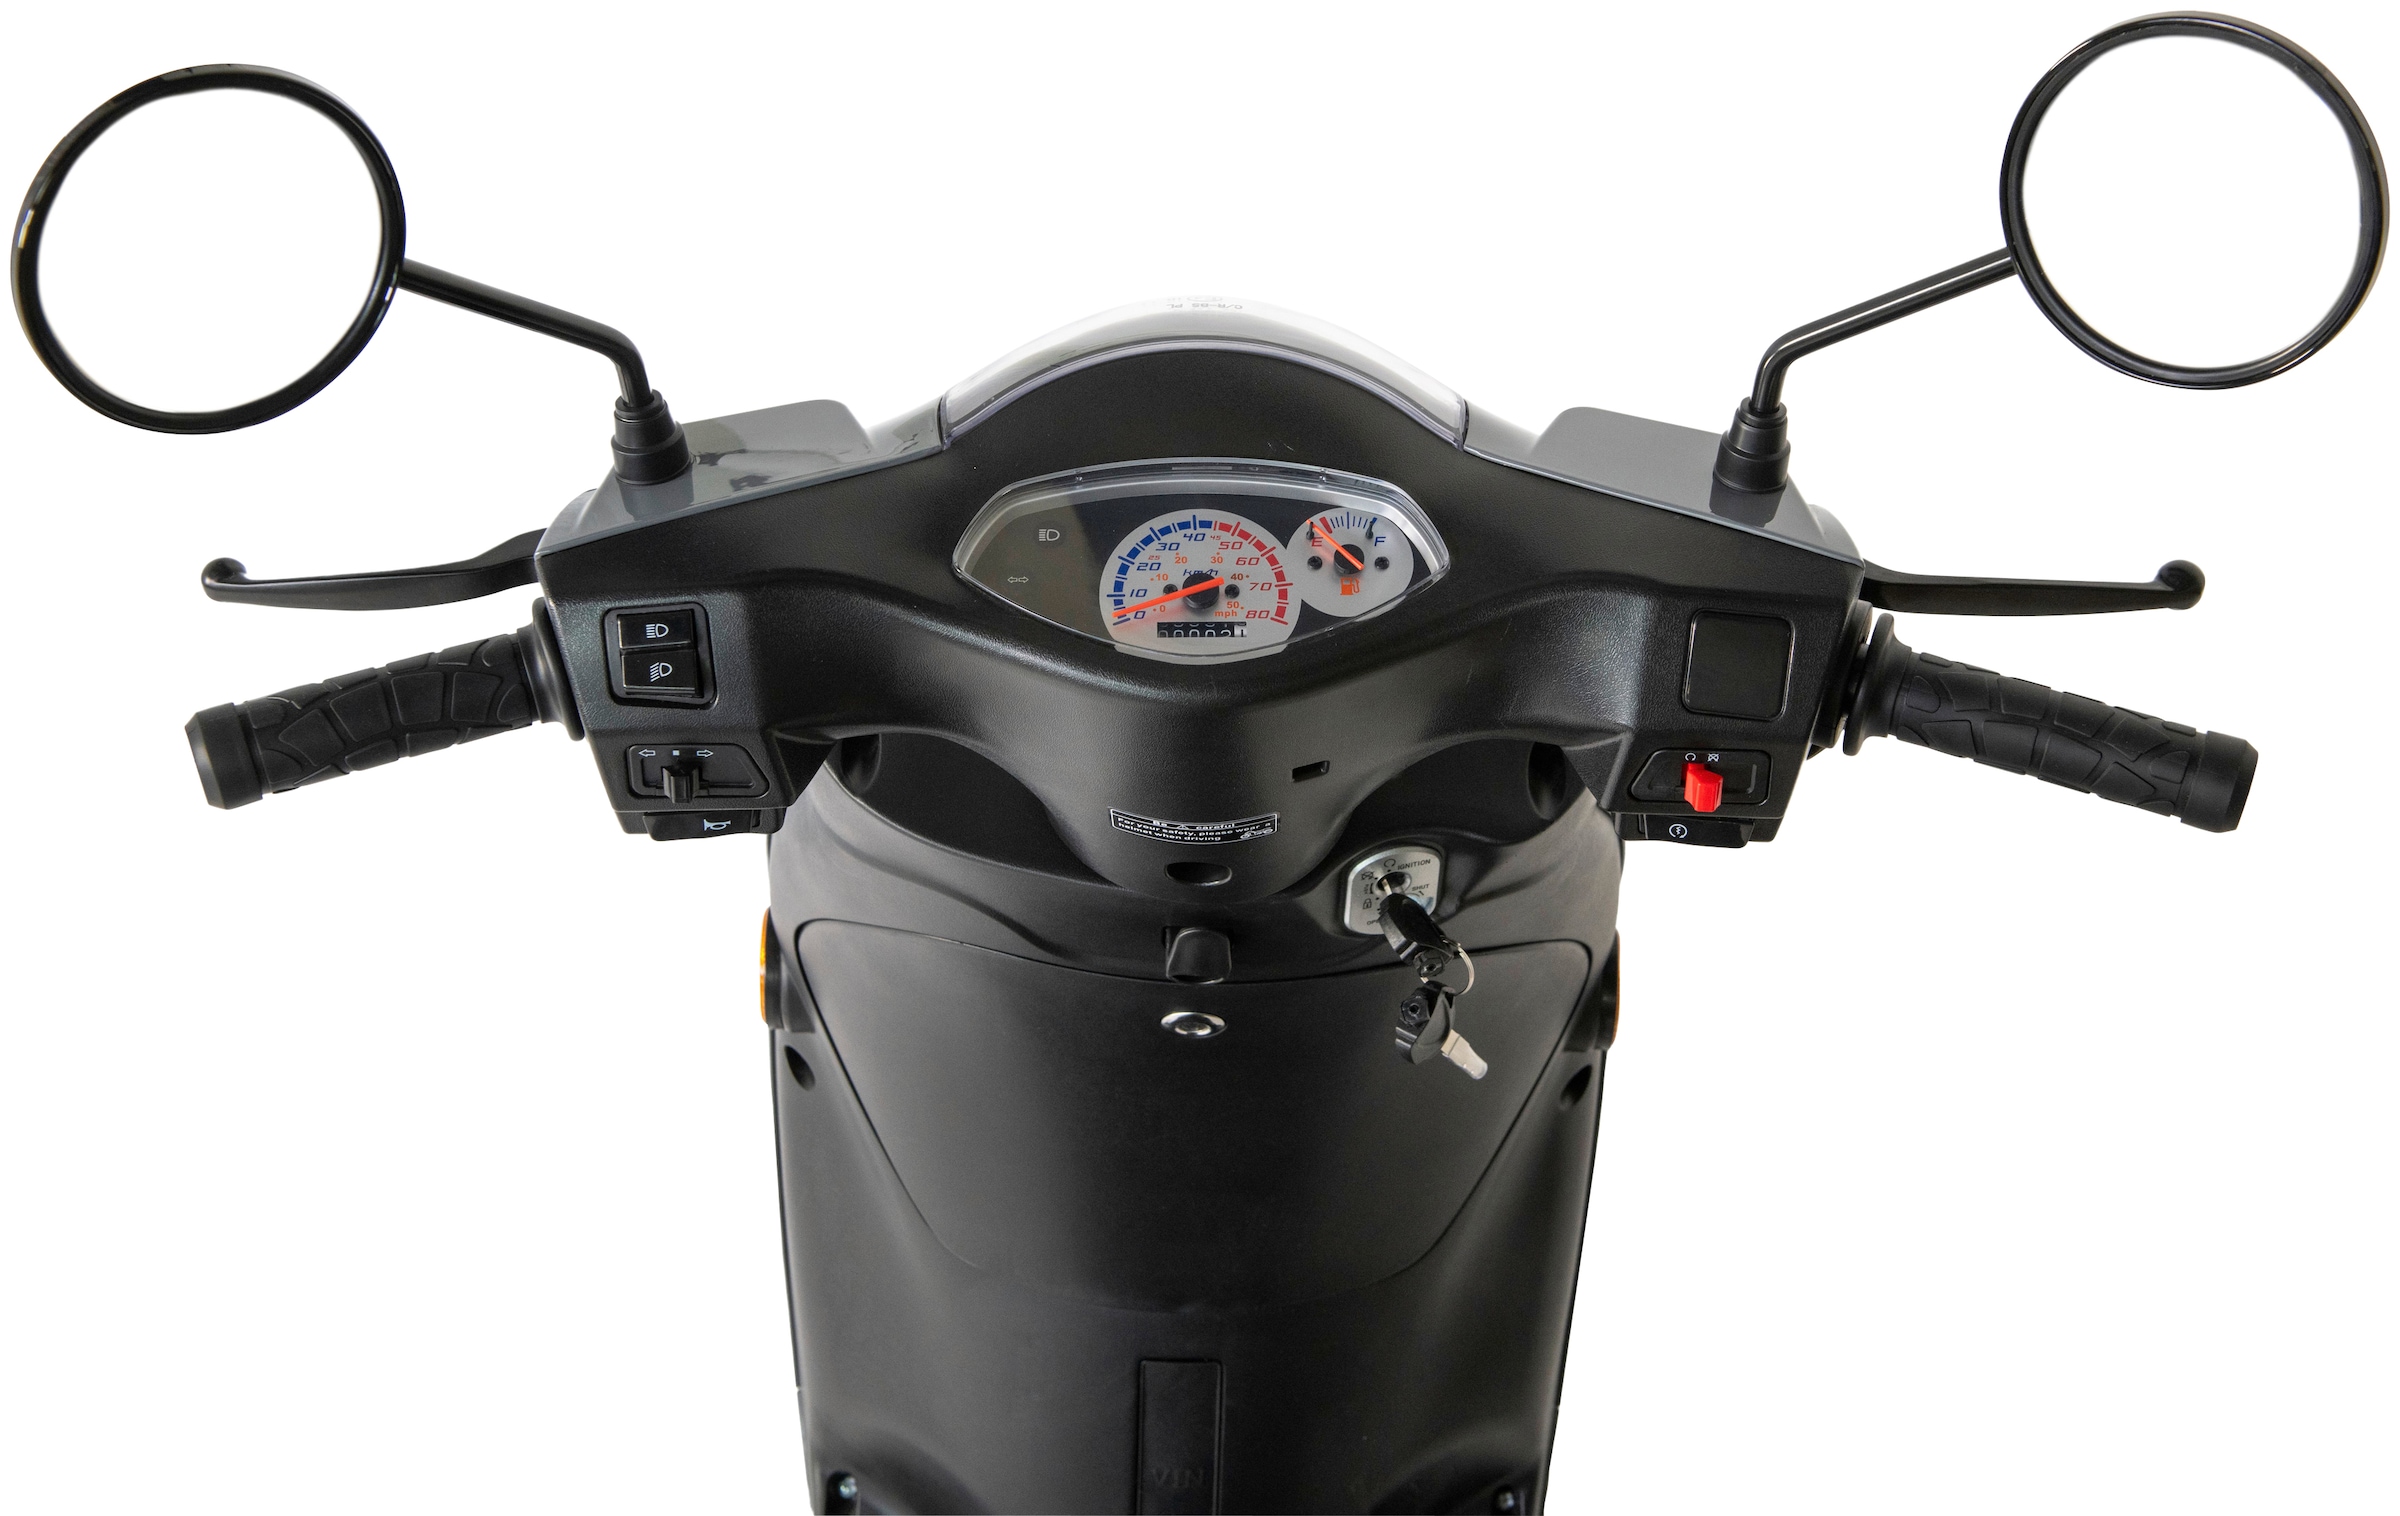 GT UNION Motorroller »Matteo 50-45«, 50 cm³, 45 km/h, Euro 5, 3 PS,  (Komplett-Set, 2 tlg., mit Topcase), inkl. Topcase online kaufen